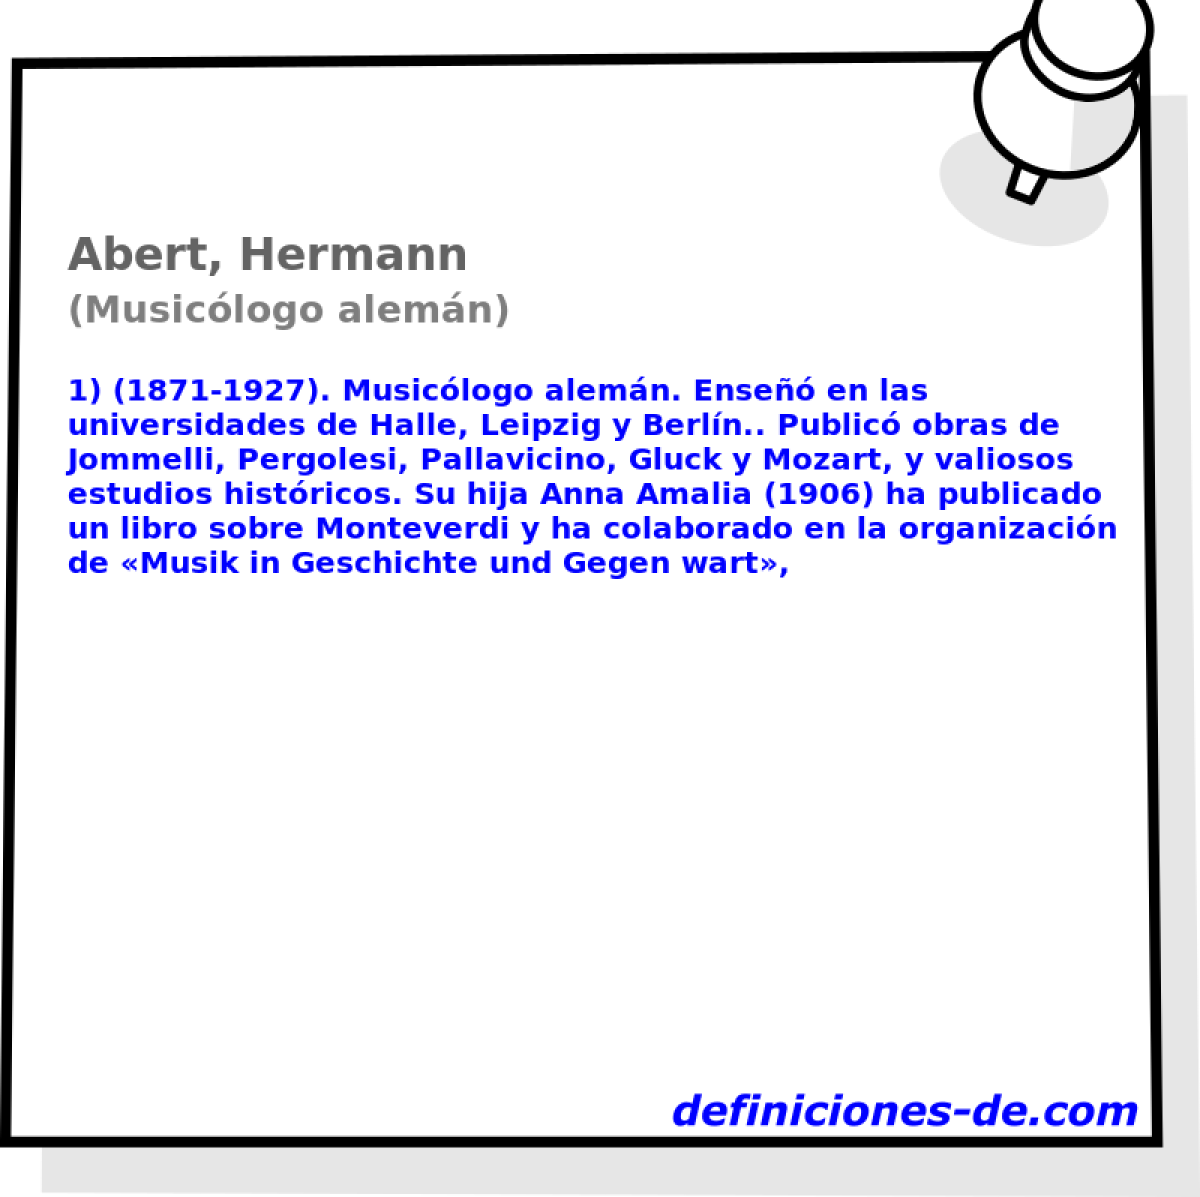 Abert, Hermann (Musiclogo alemn)